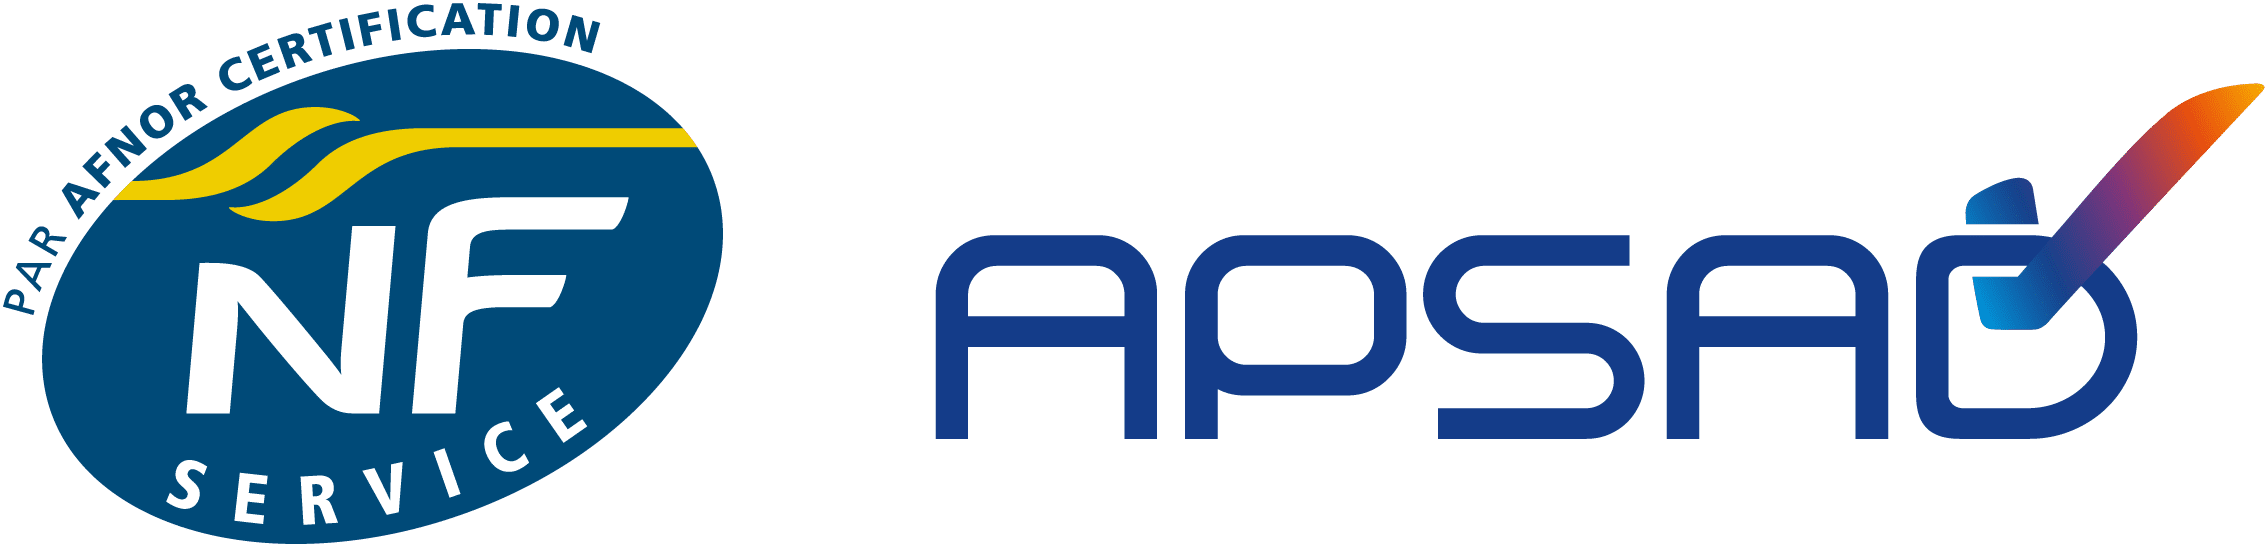 Logo NFService APSAD rvb 0